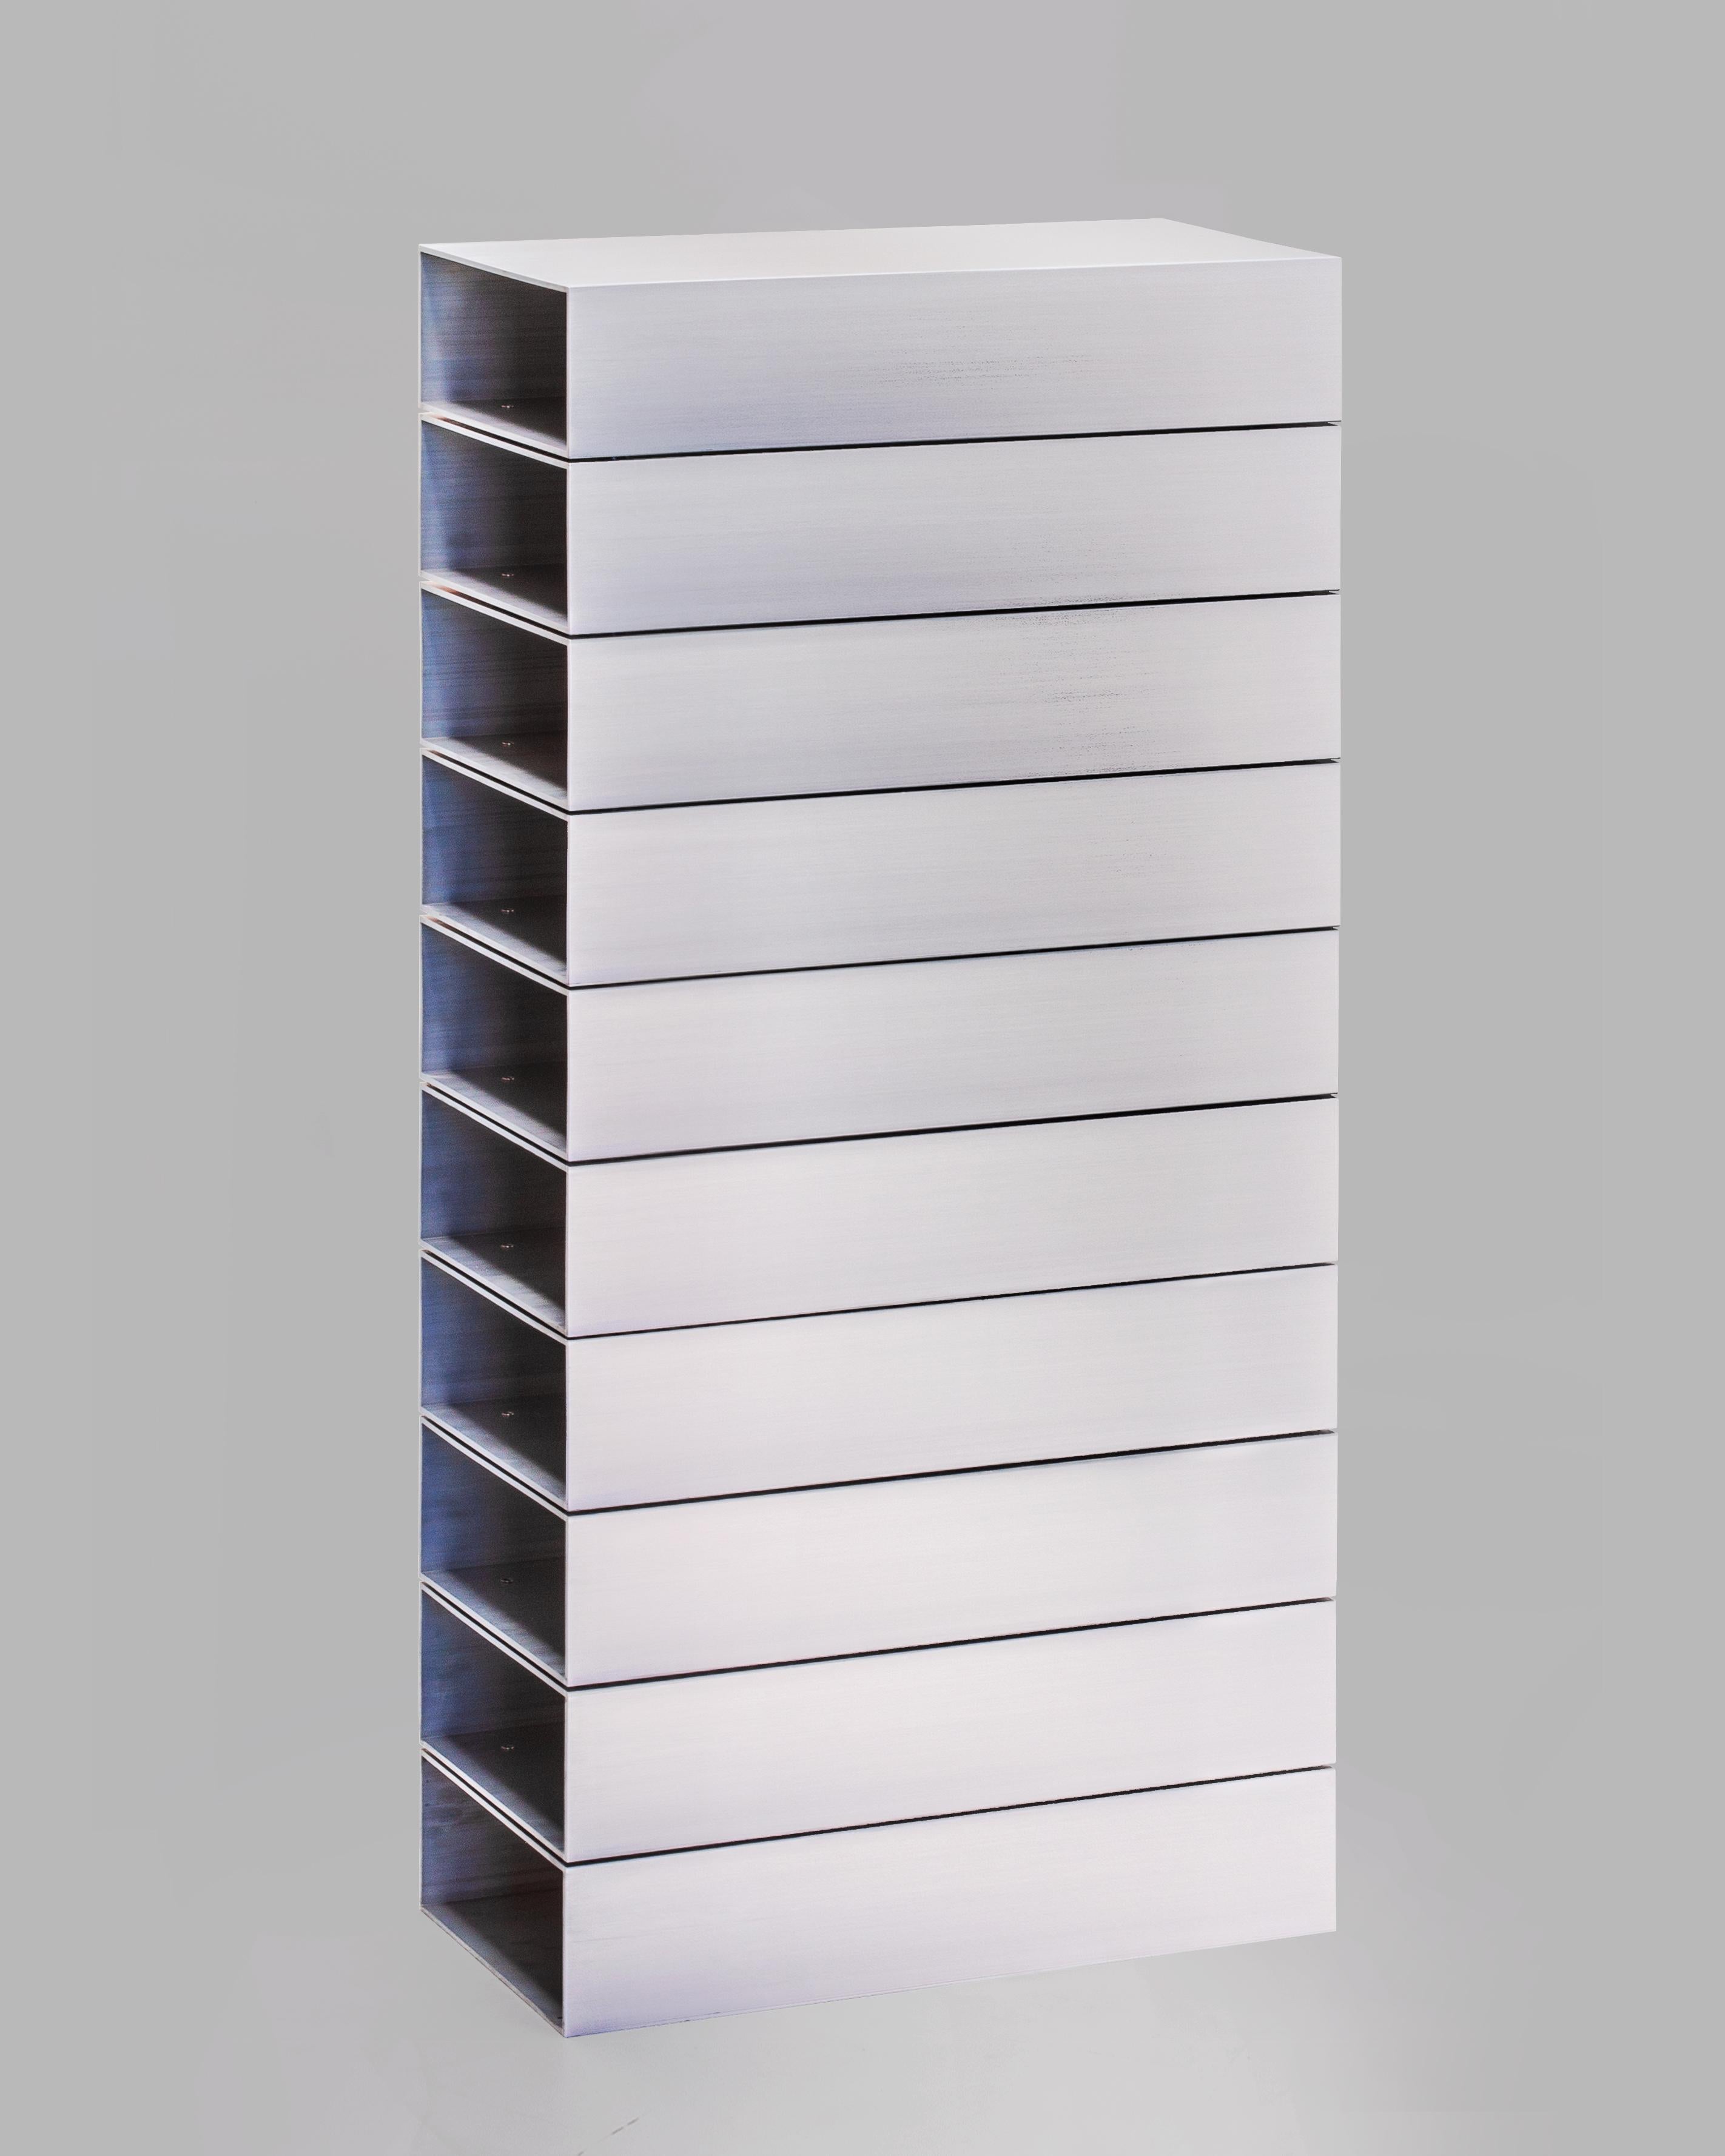 Aluminum Stack Shelf in Brushed Aluminium by Johan Viladrich For Sale